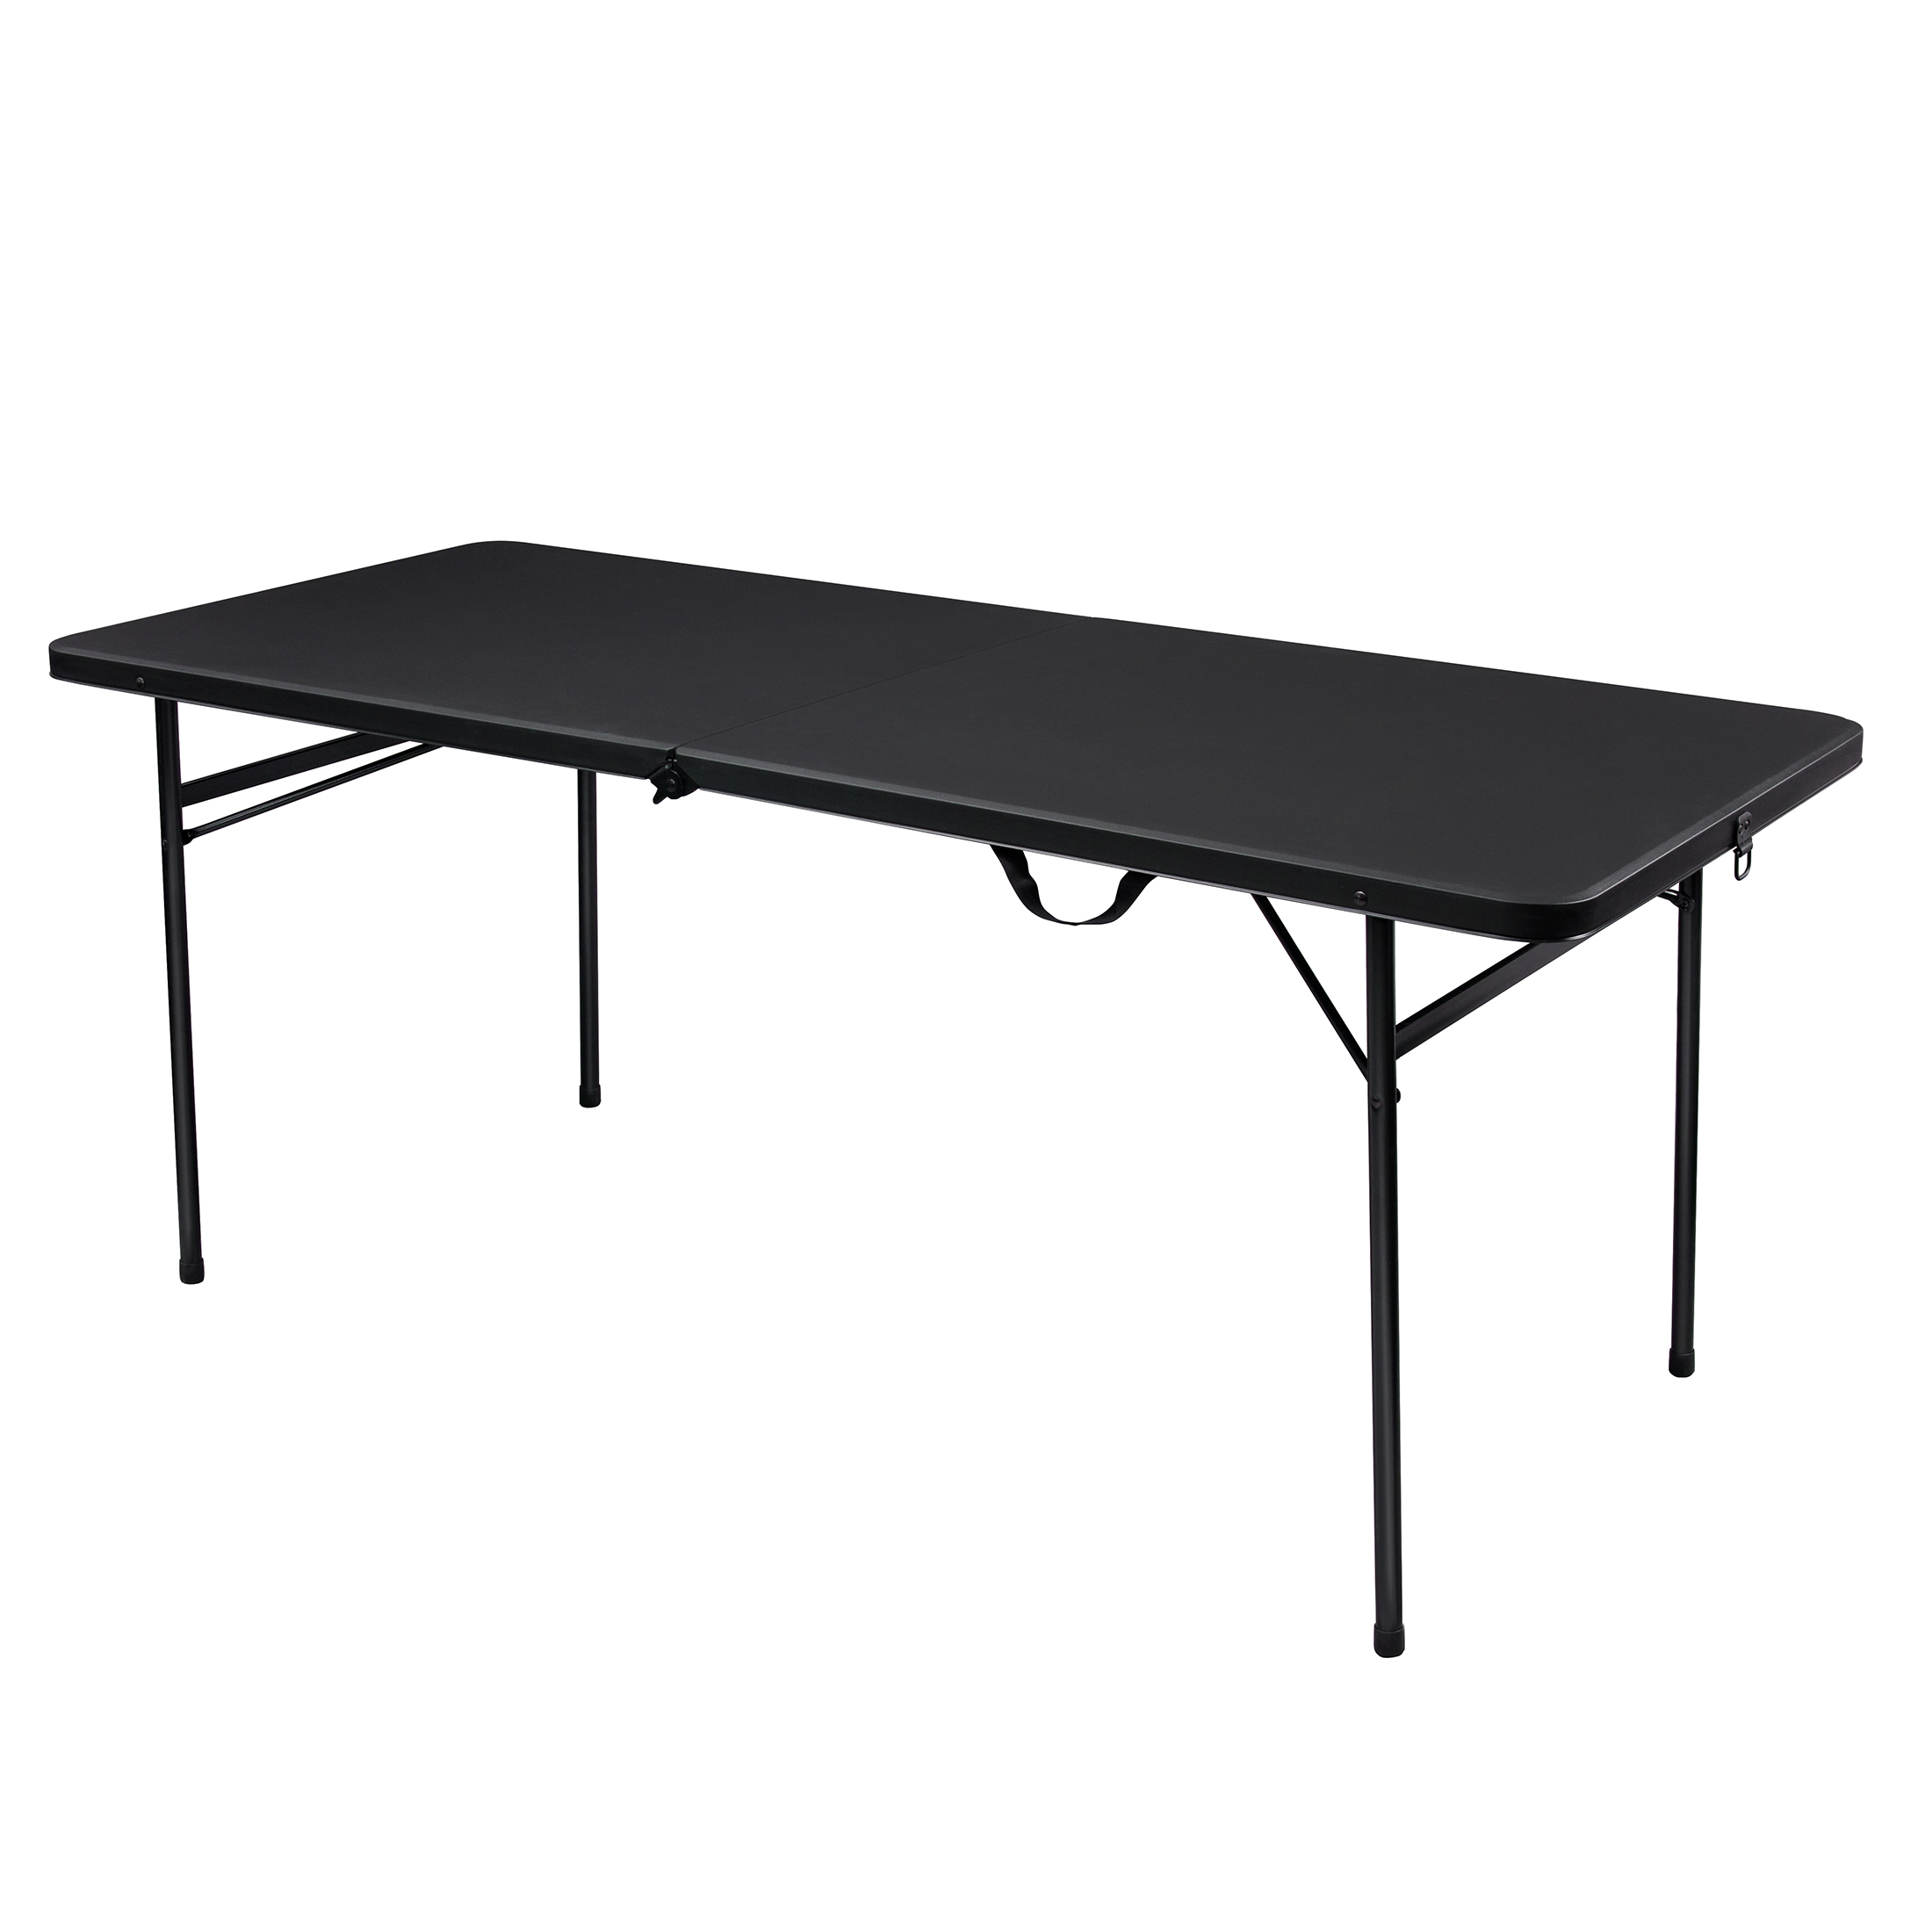 Mainstays 6 Foot Bi-Fold Plastic Folding Table, Black - image 3 of 8